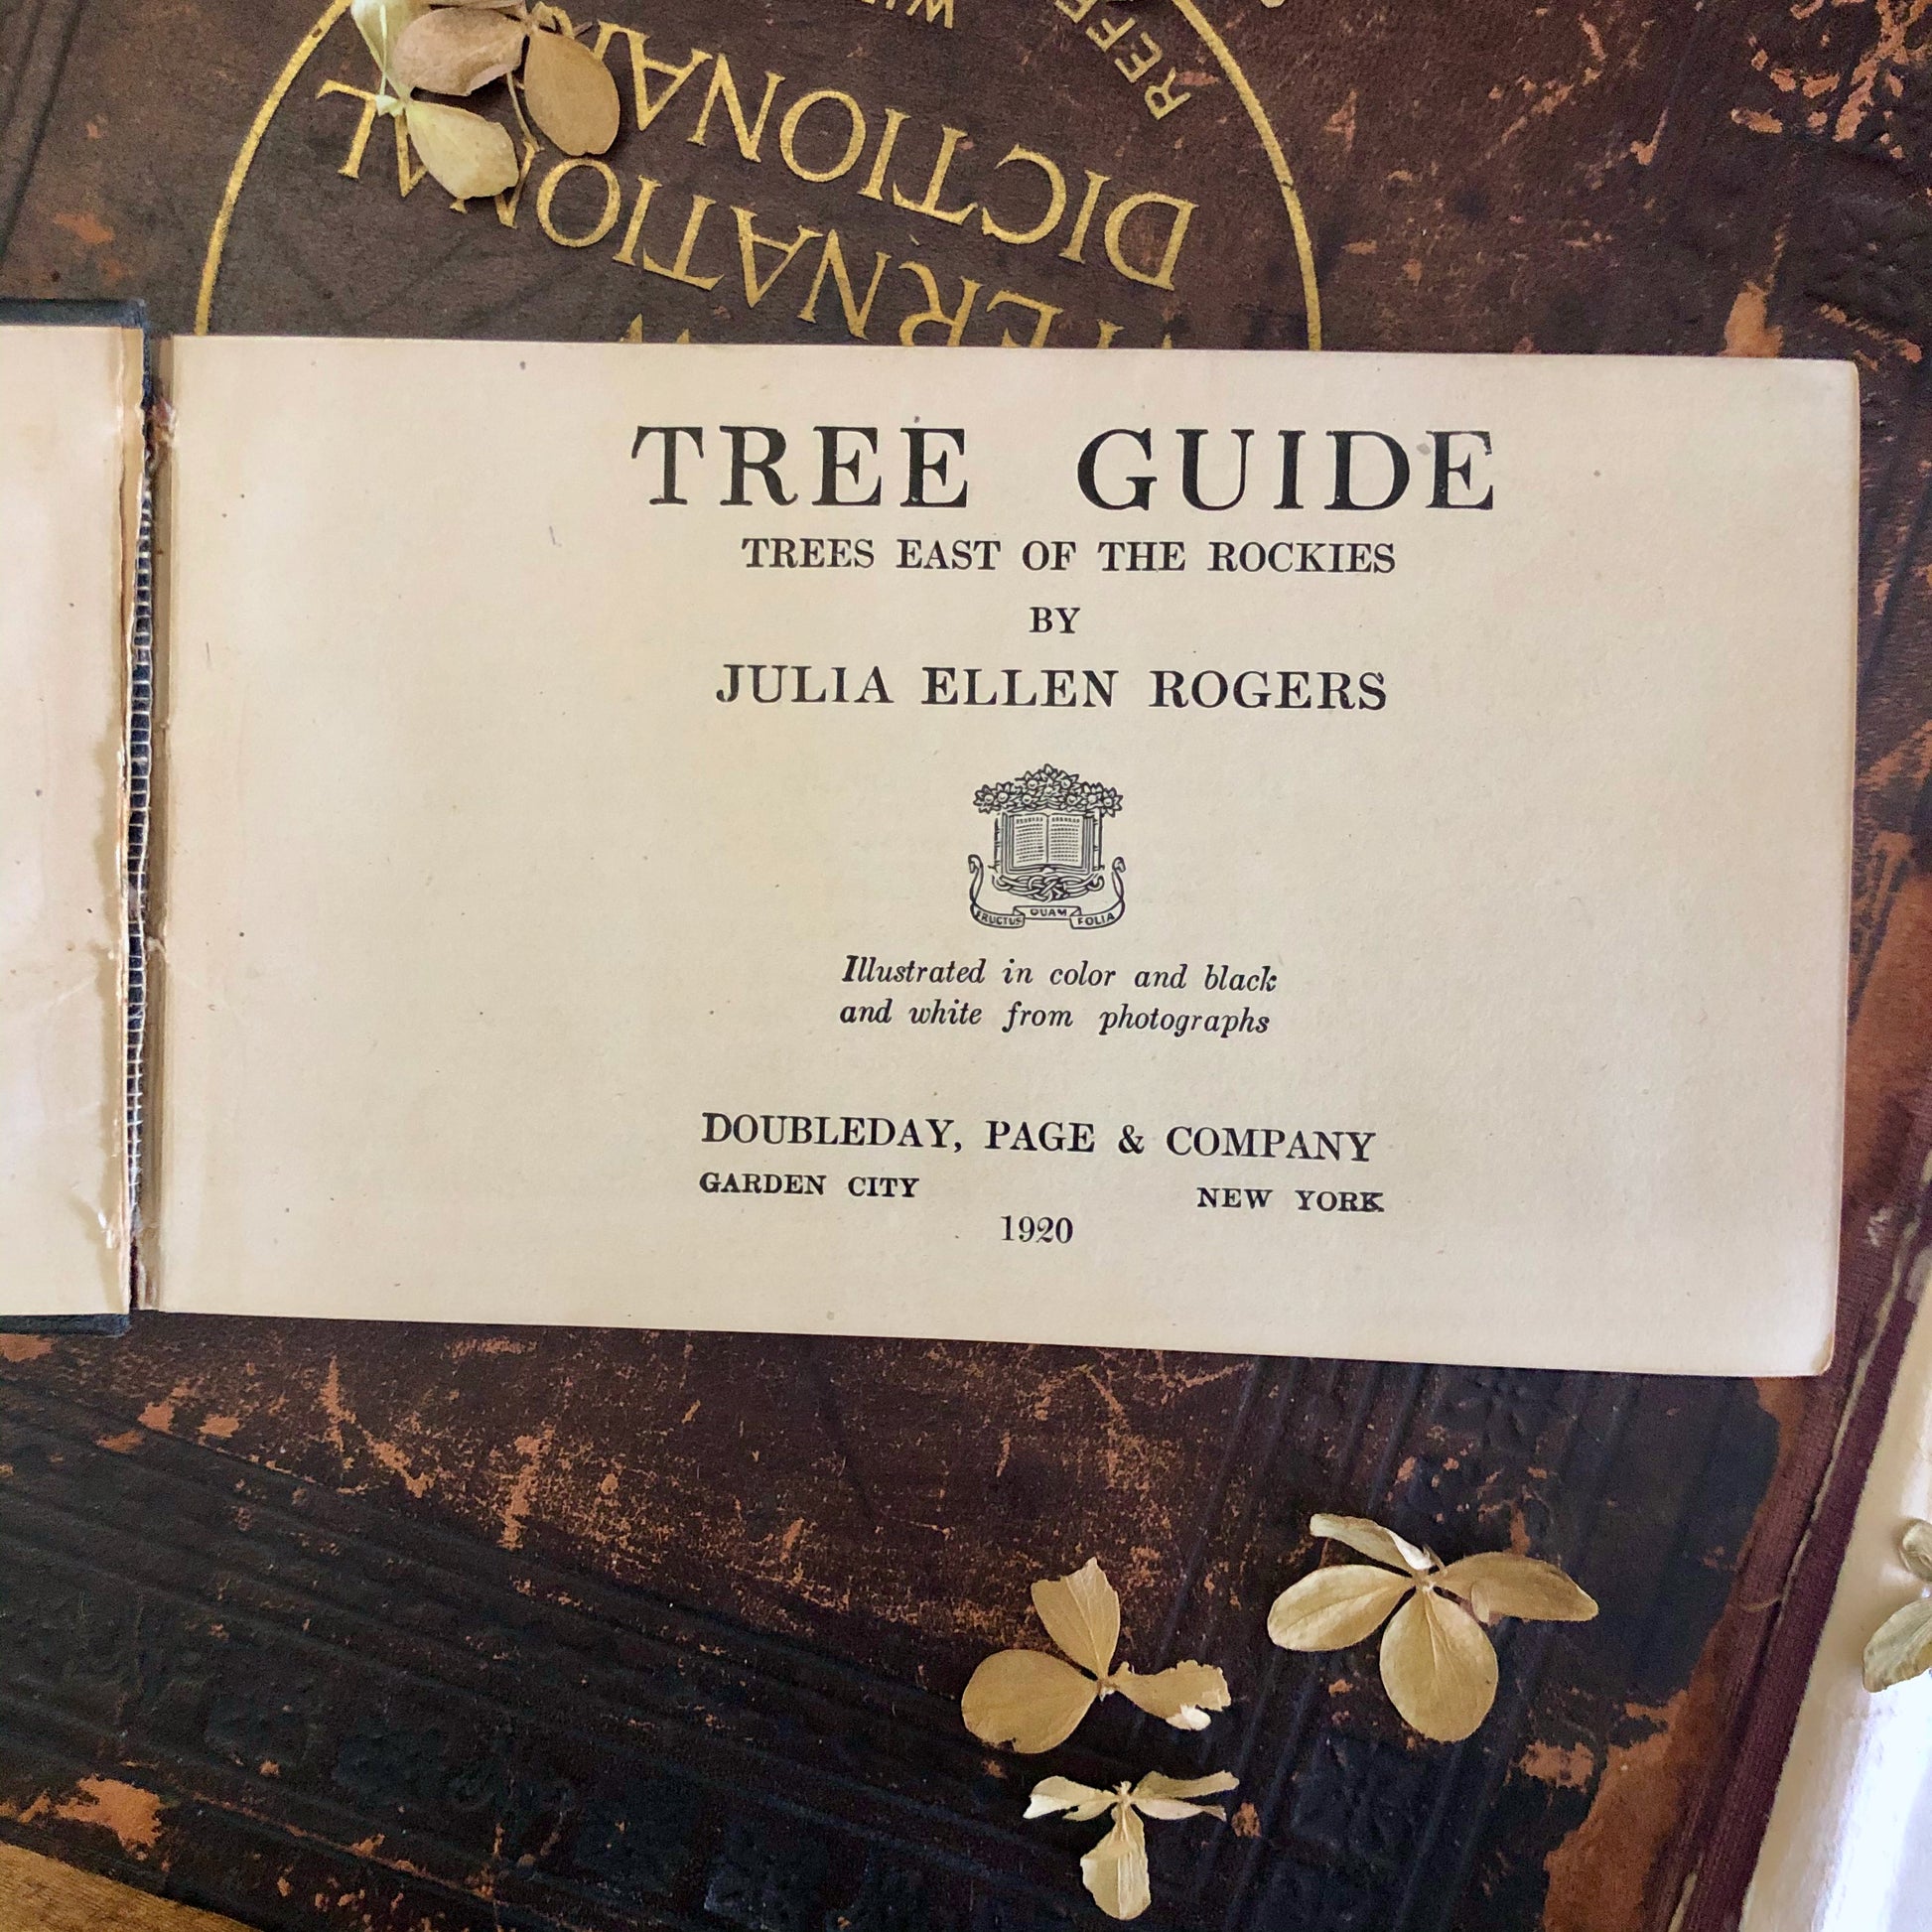 Tree Guide Antique Pocket Manual (1920)